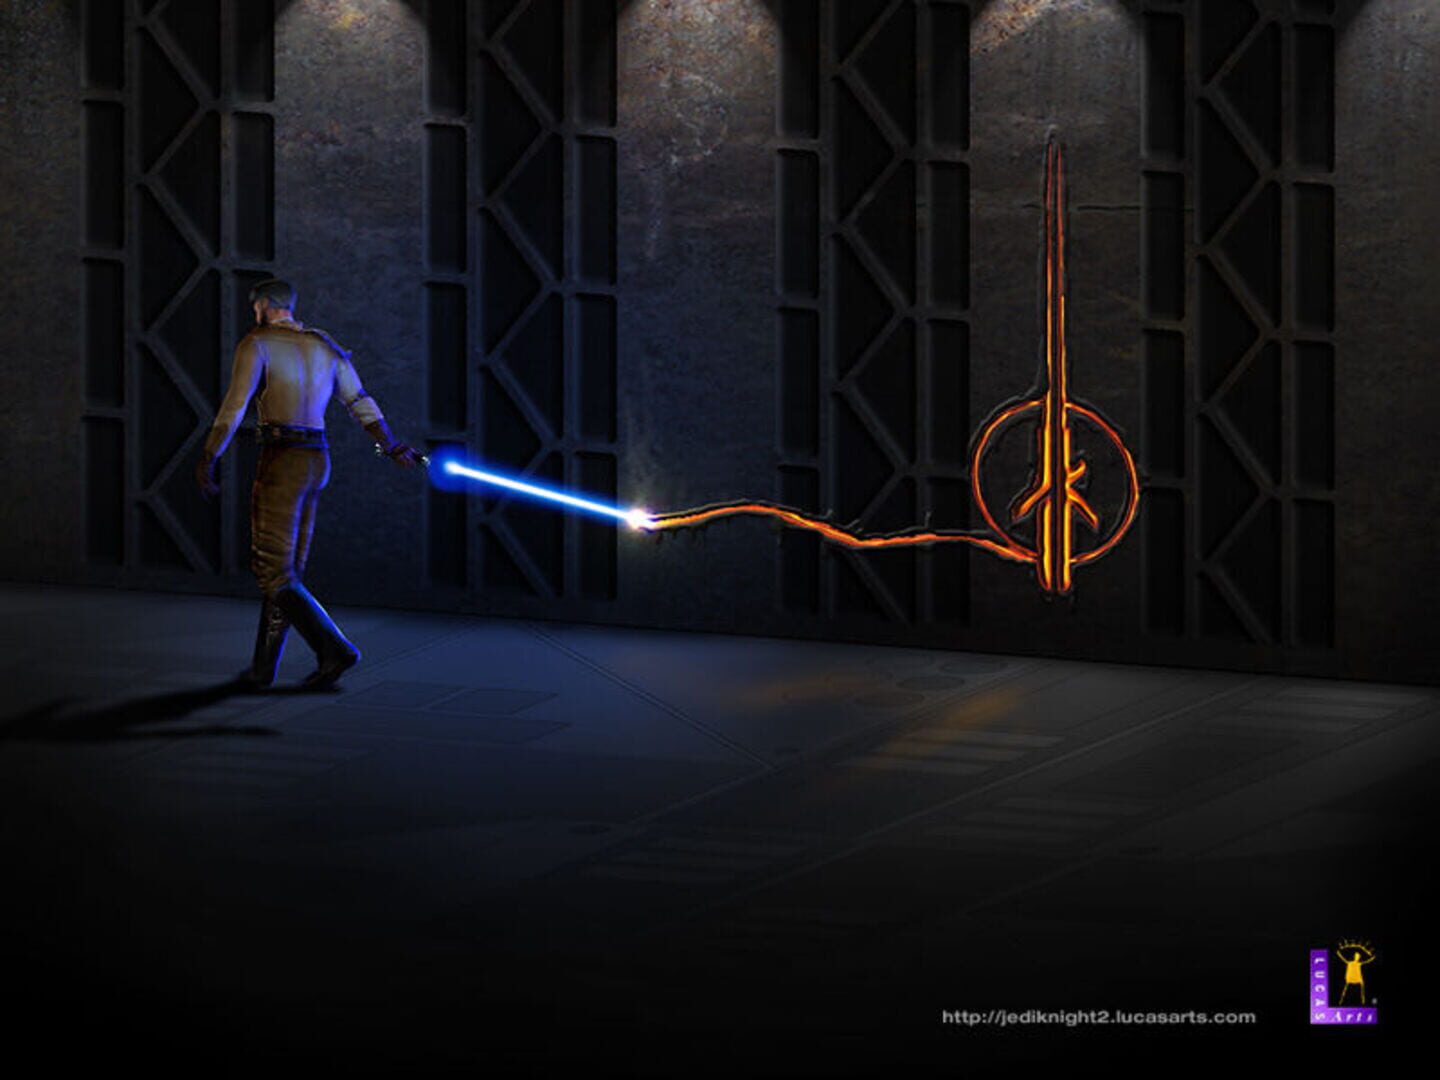 Arte - Star Wars: Jedi Knight II - Jedi Outcast